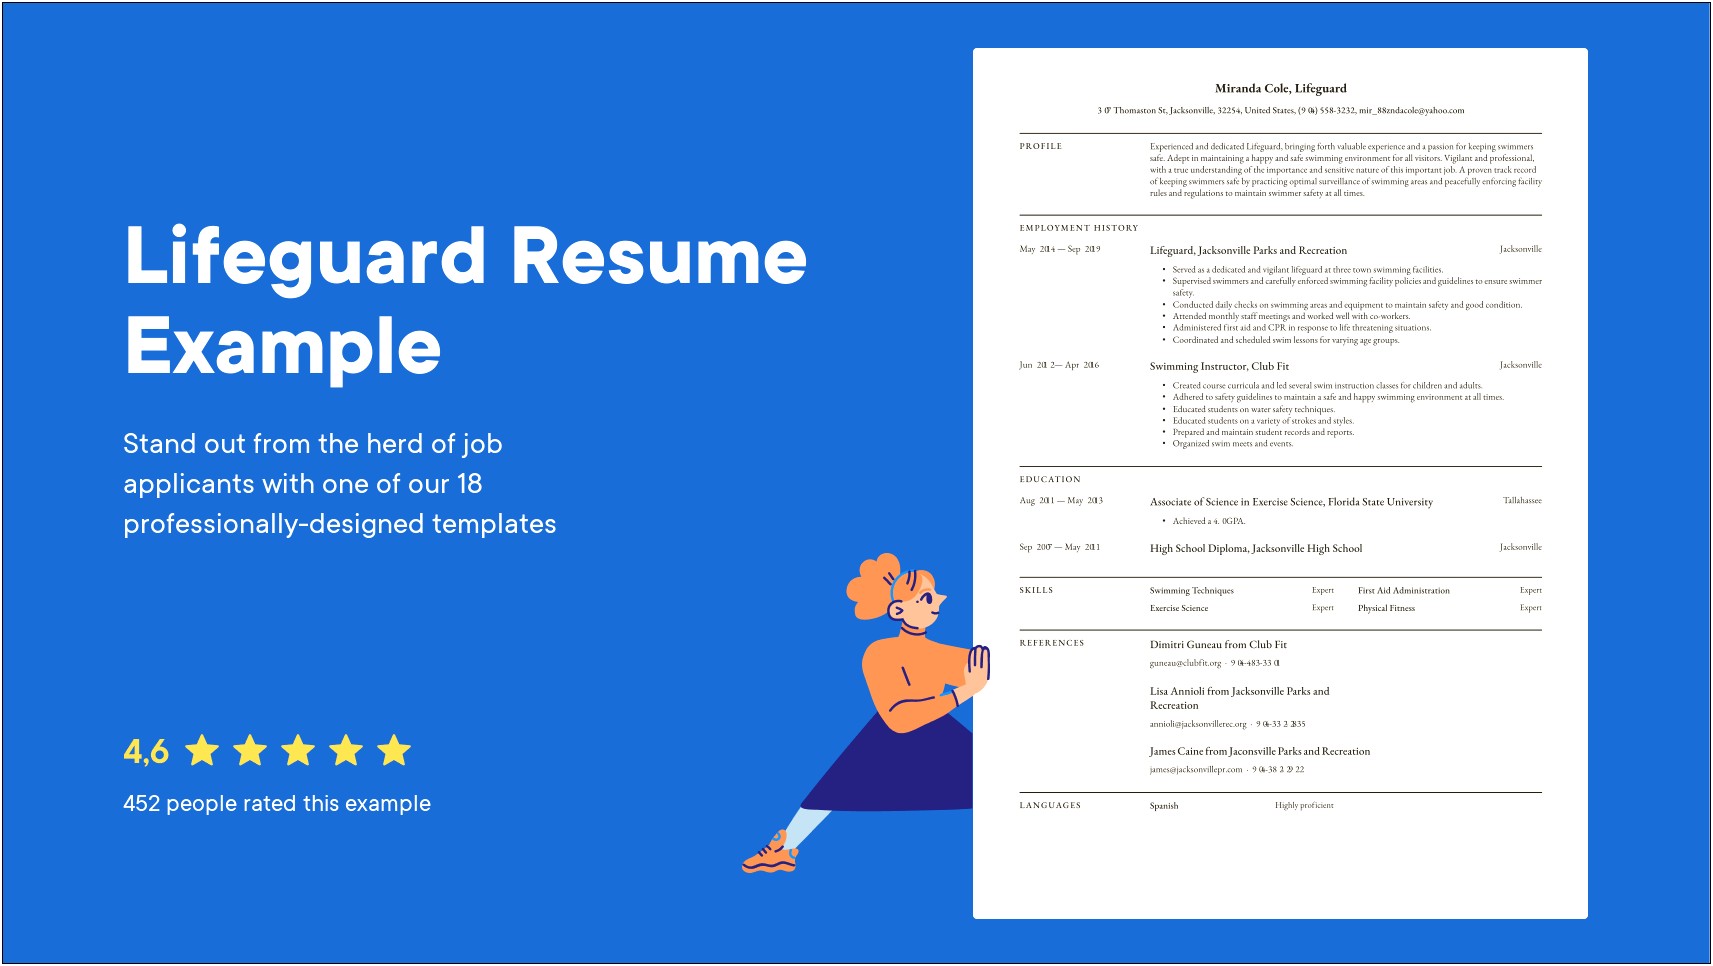 Resume Objective For Lifeguard Job